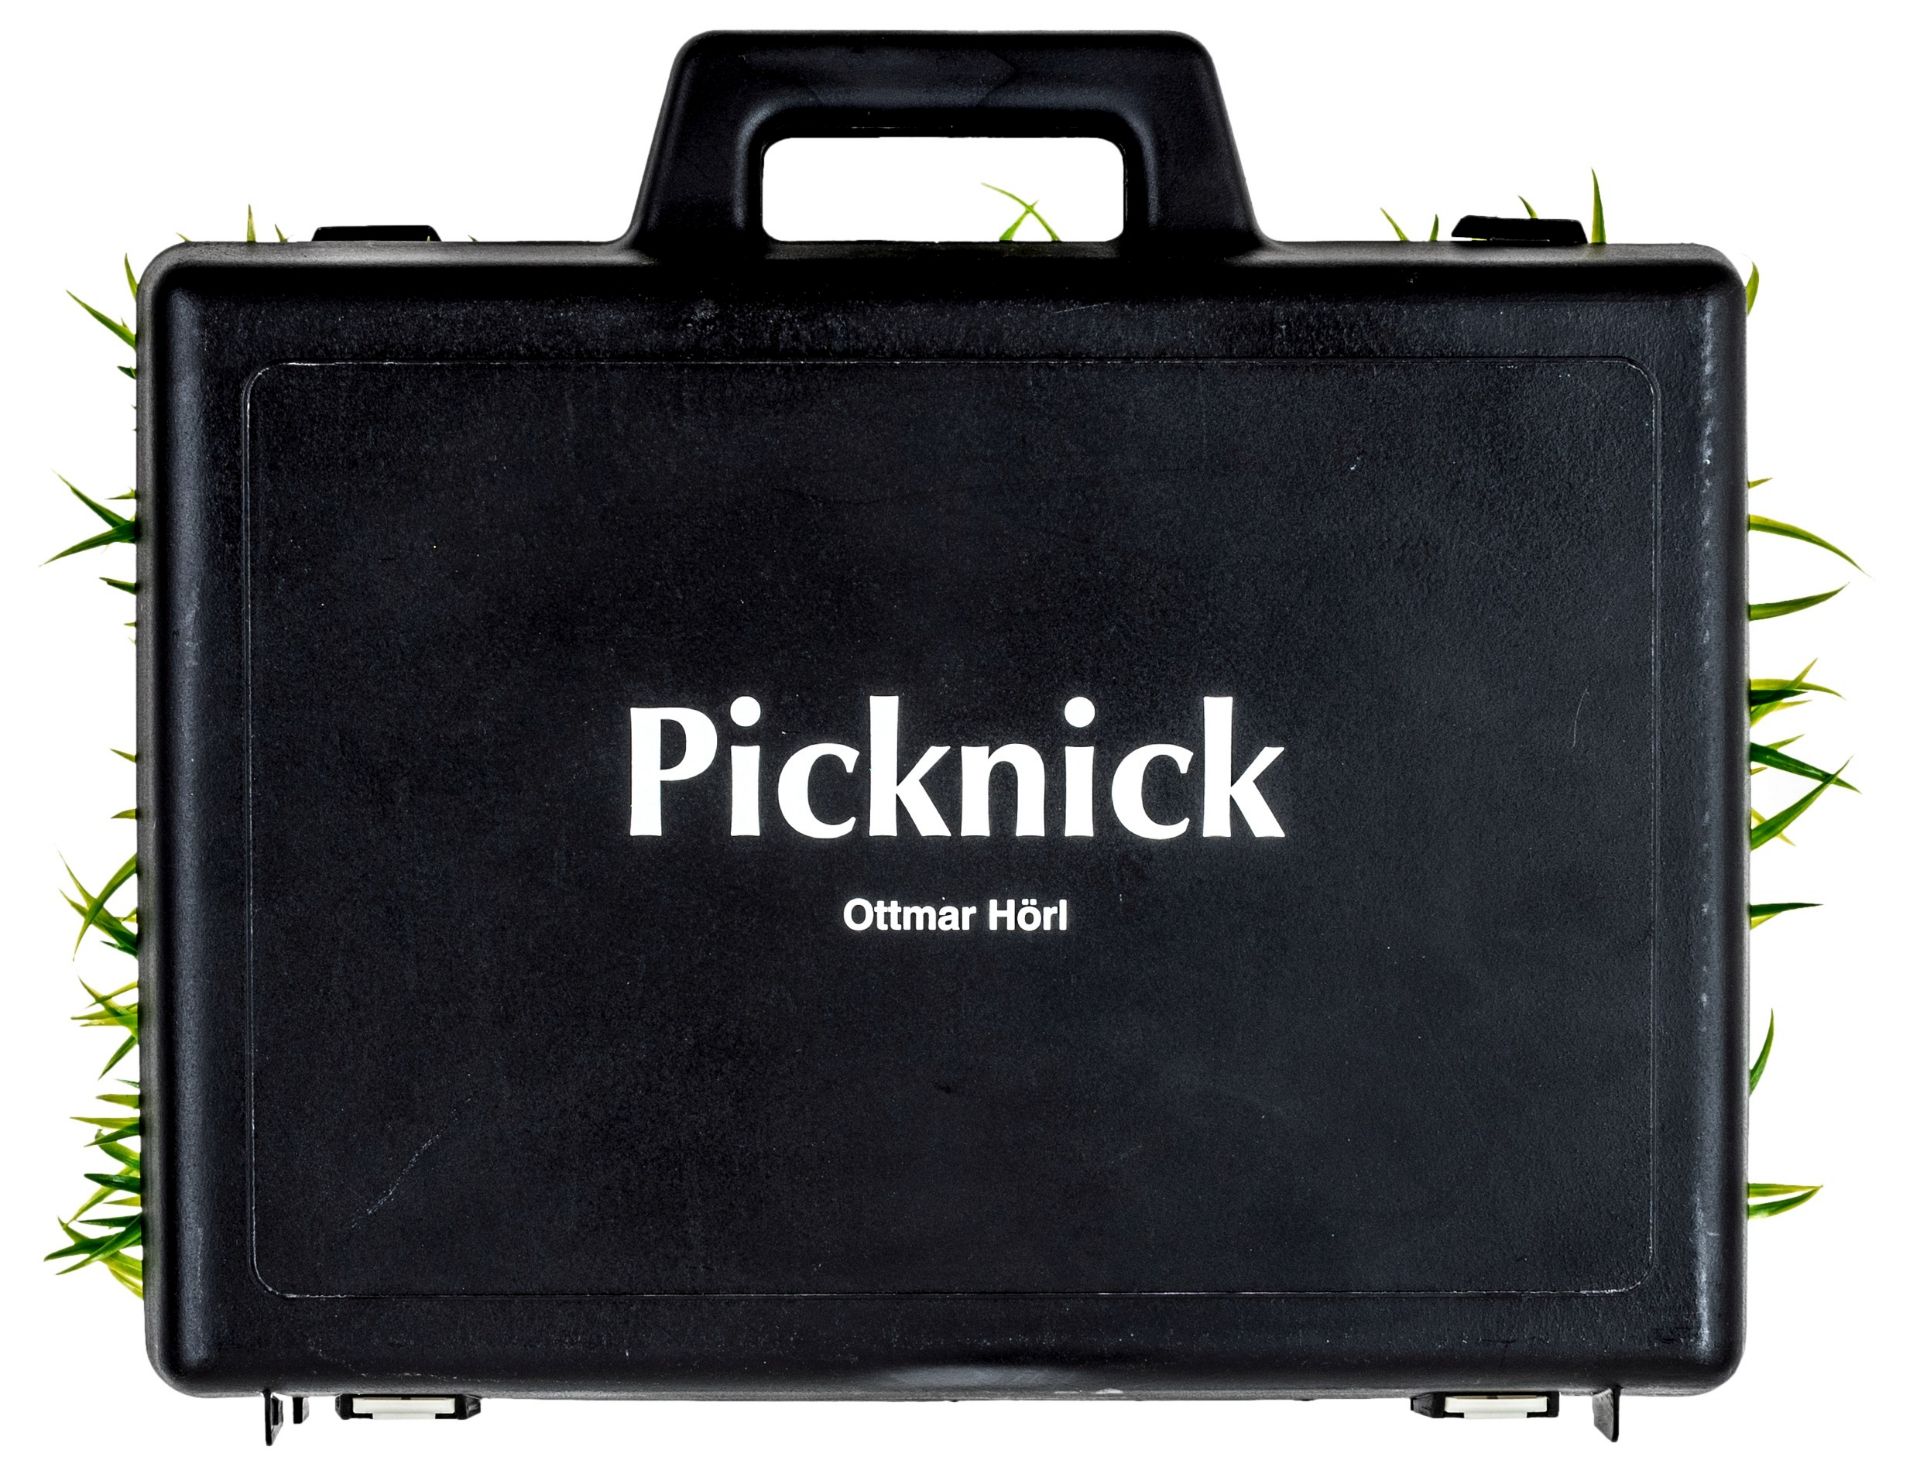 Hörl, Ottmar. Picknick. - Image 2 of 3